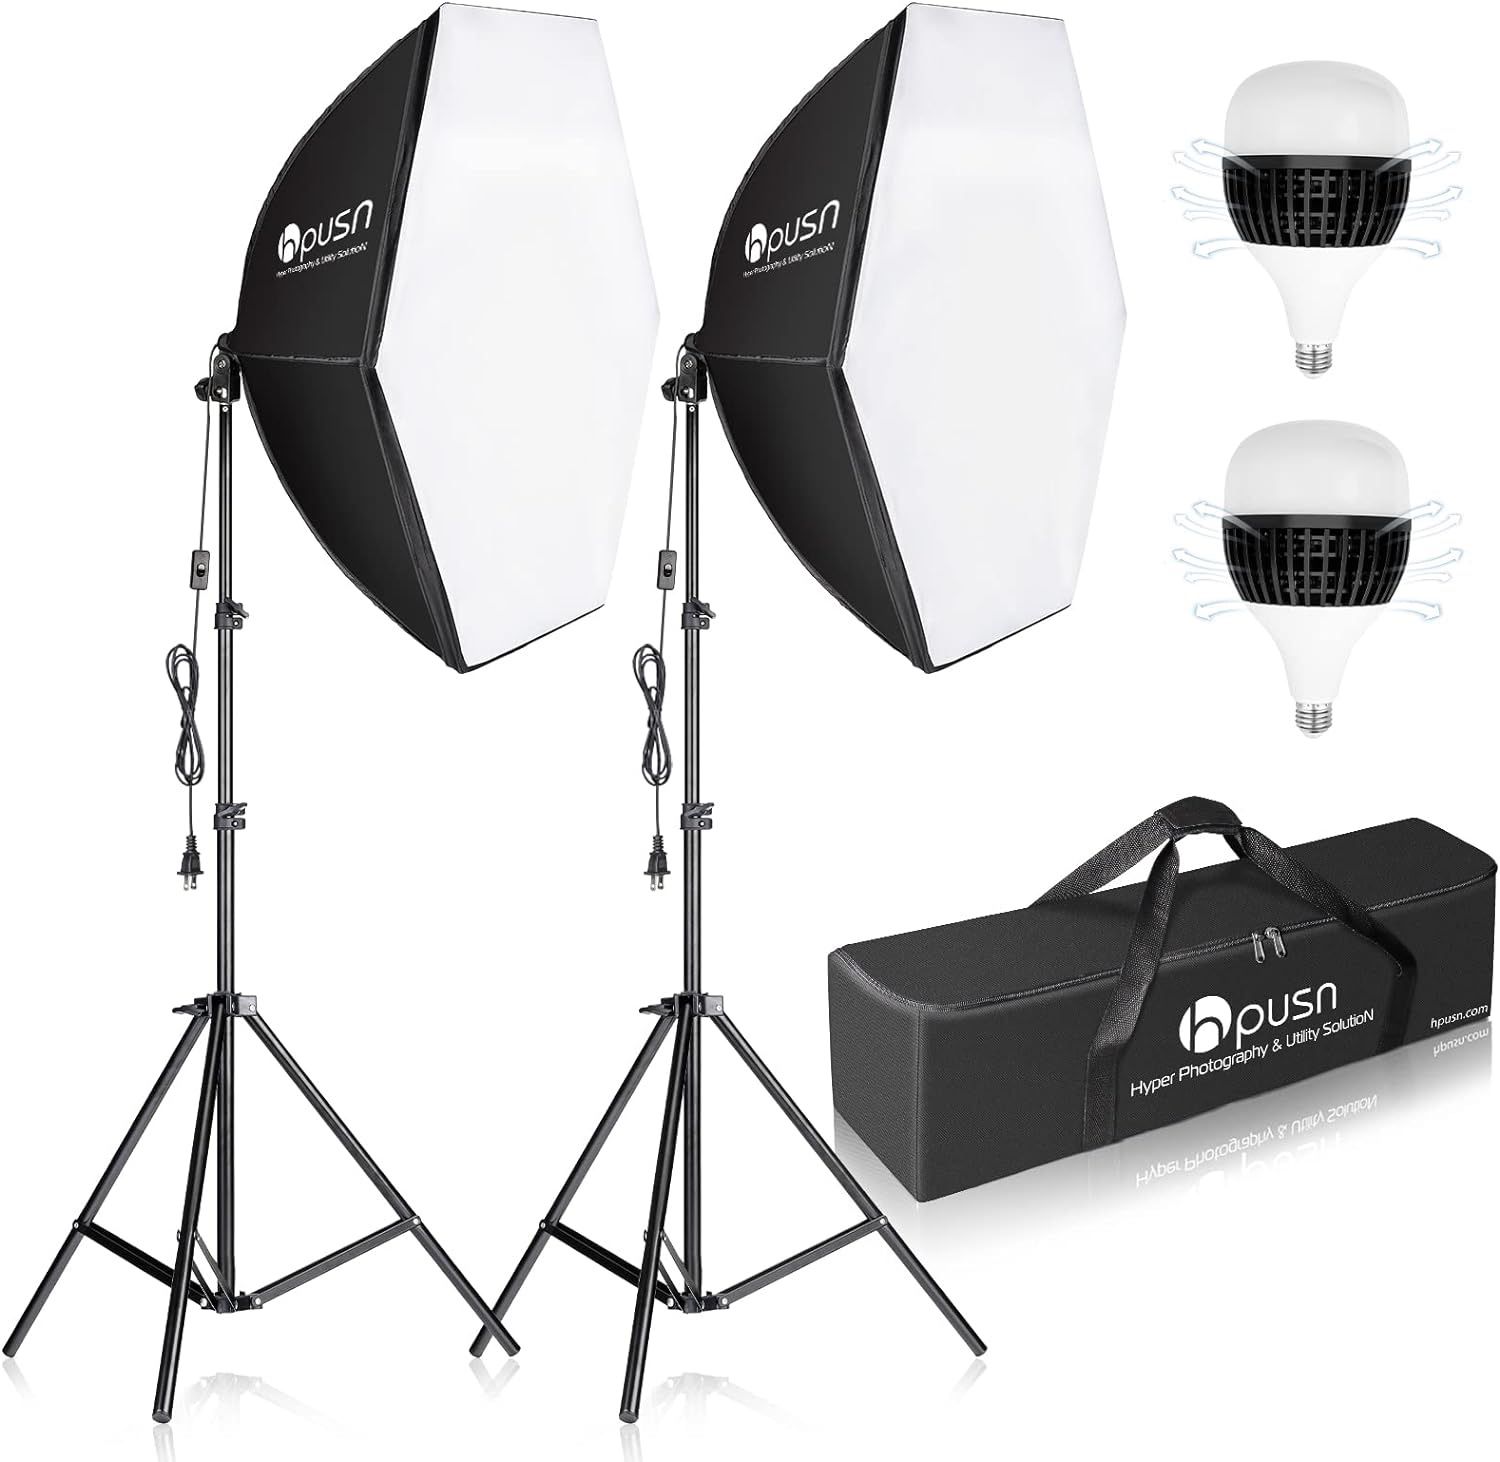 Soft Box photography lighting Kit